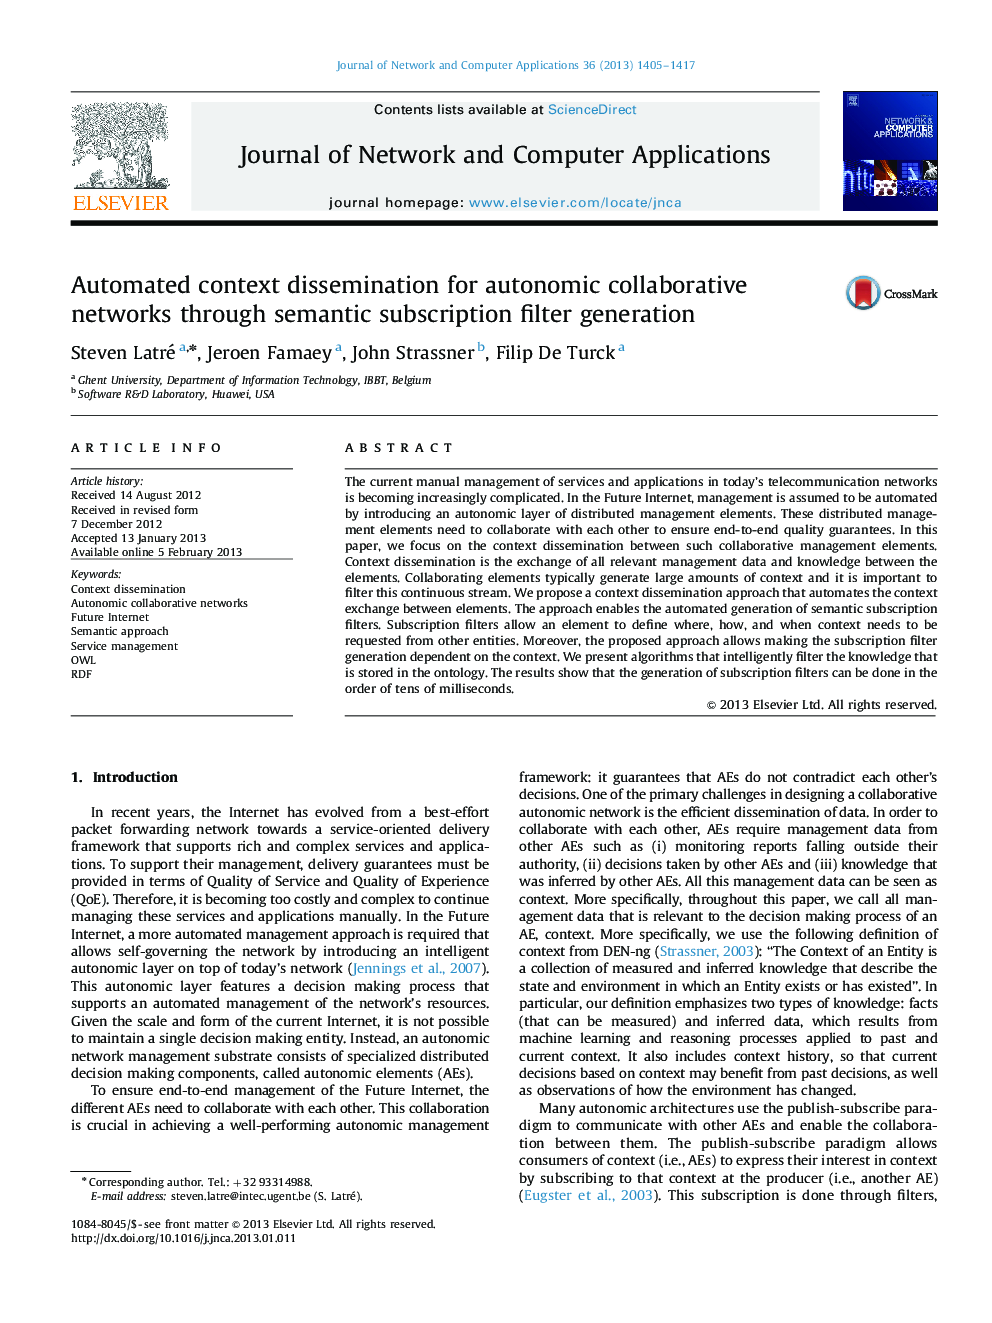 Automated context dissemination for autonomic collaborative networks through semantic subscription filter generation